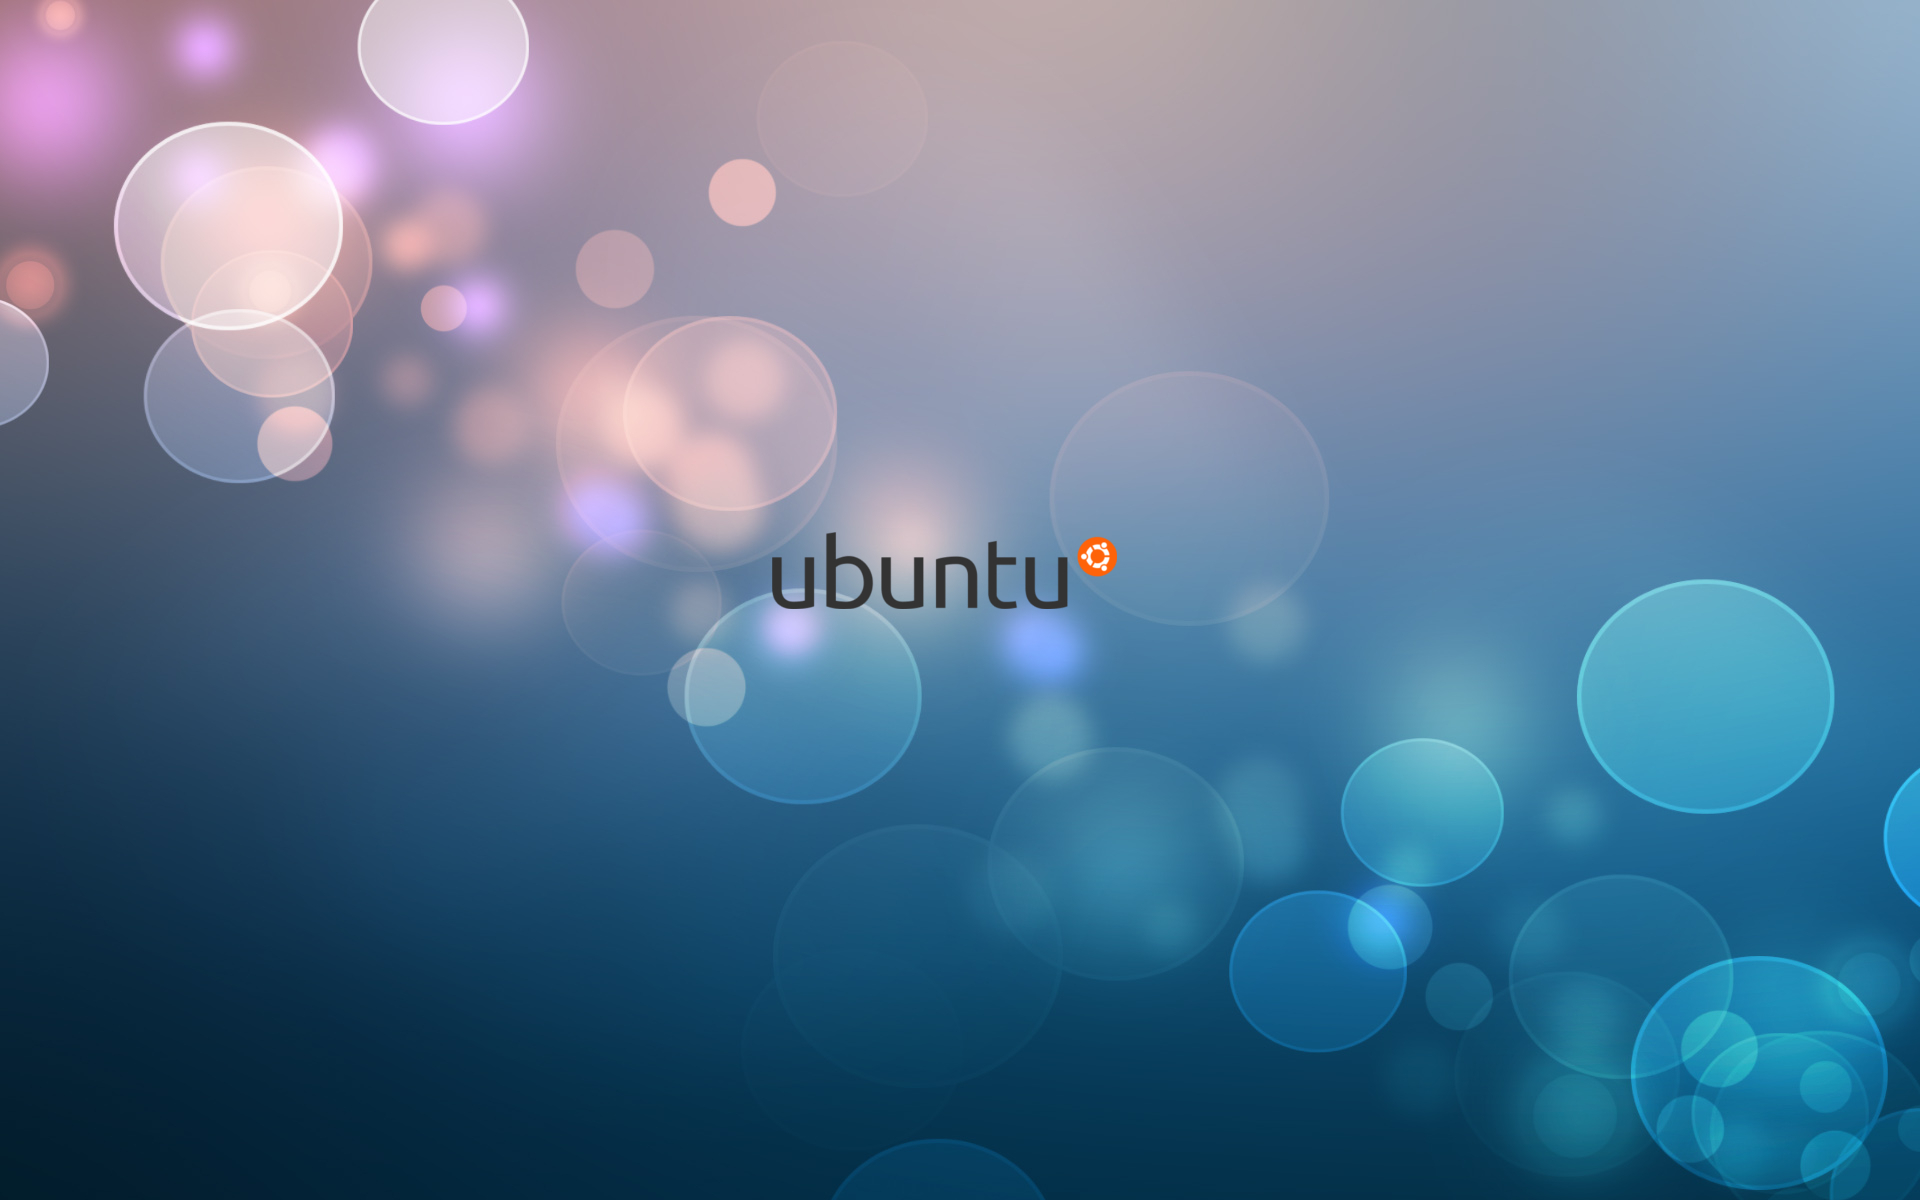 ubuntuの壁紙ダウンロード,青い,空,光,ターコイズ,設計